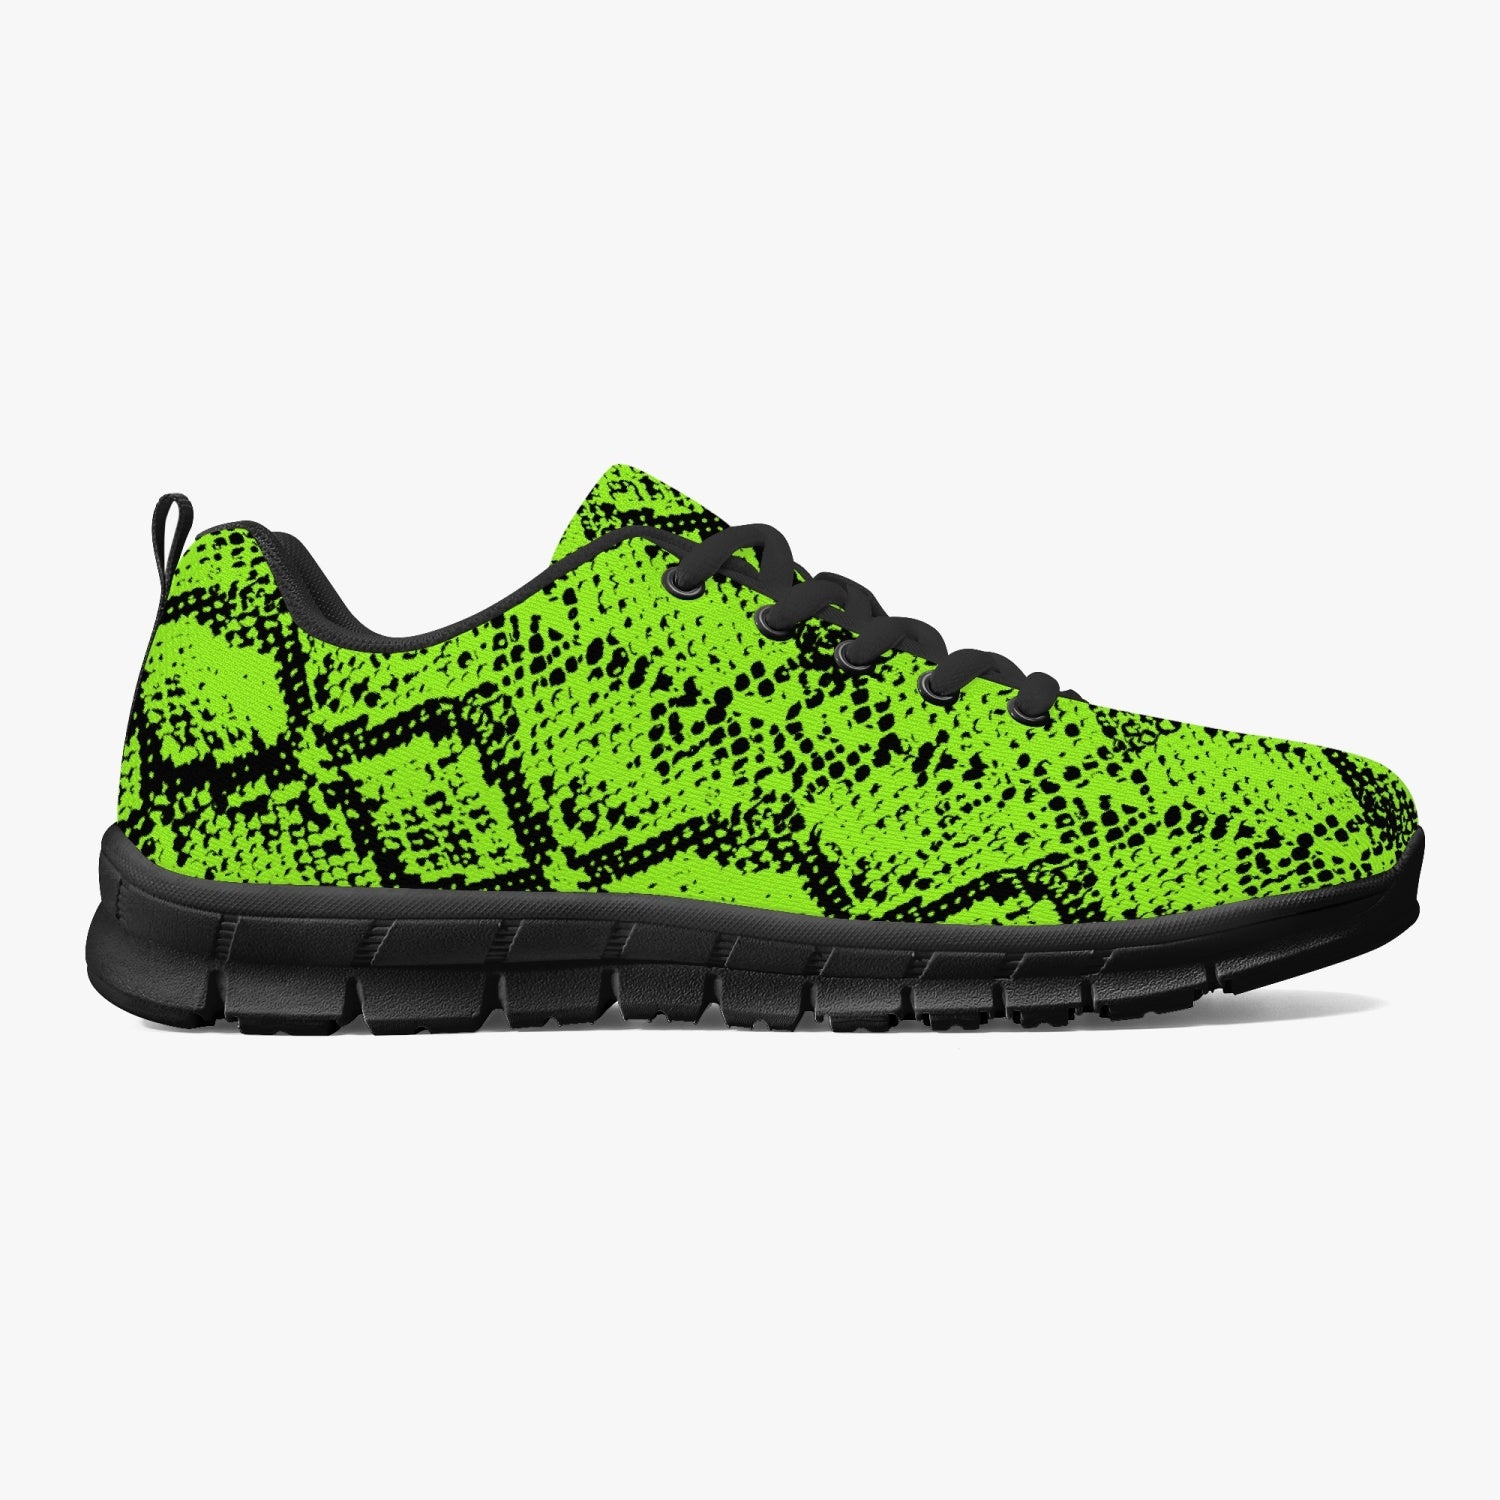 Green Snakeskin Sneakers